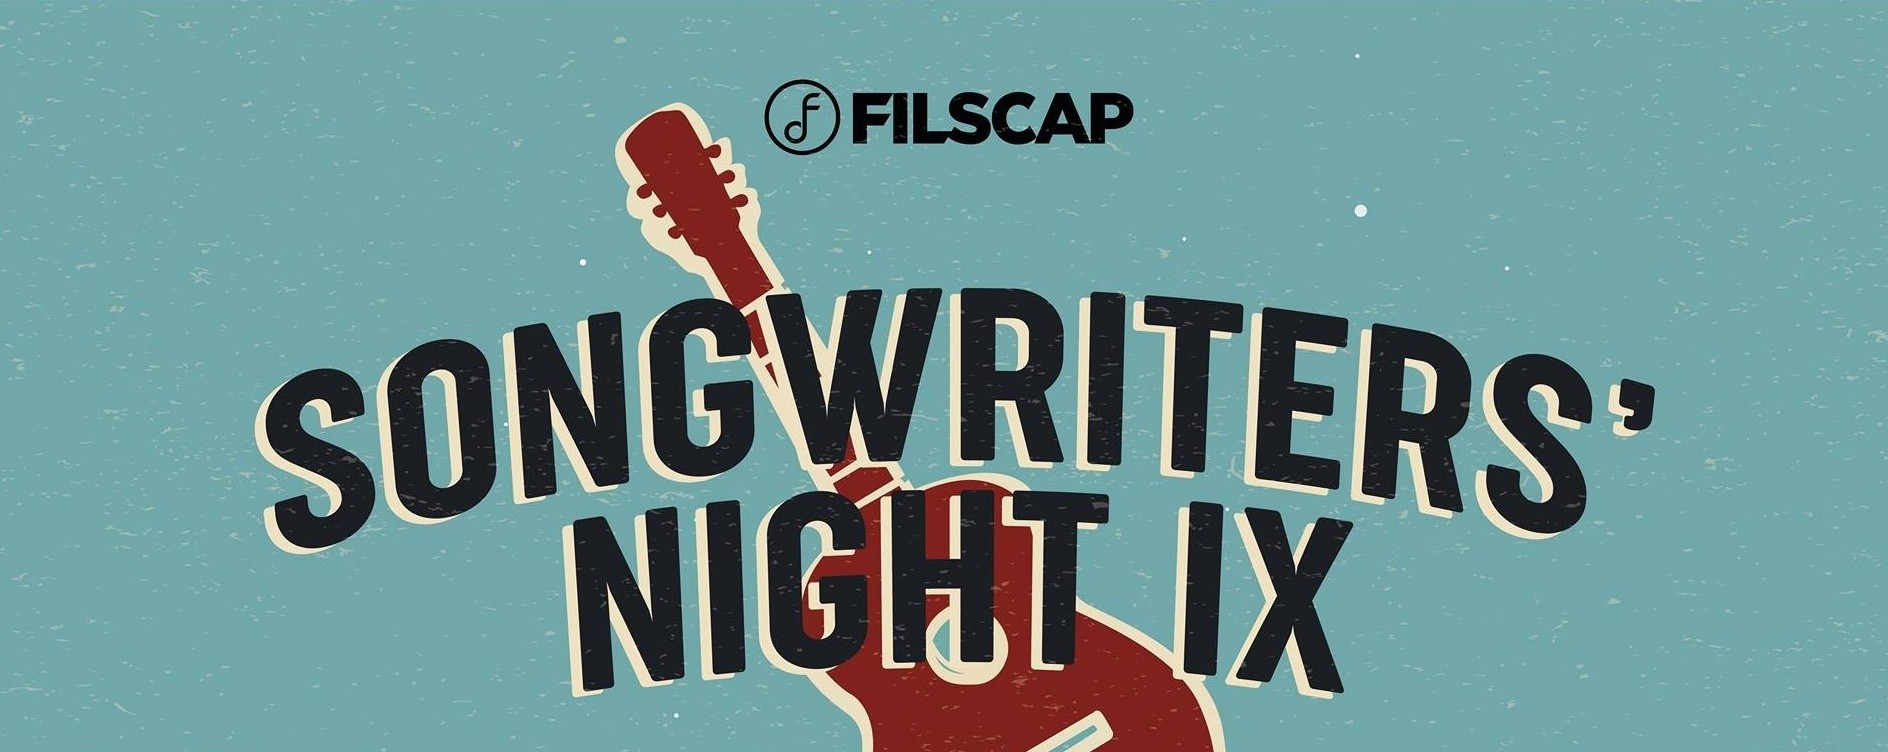 FILSCAP Songwriters' Night IX - Upper House